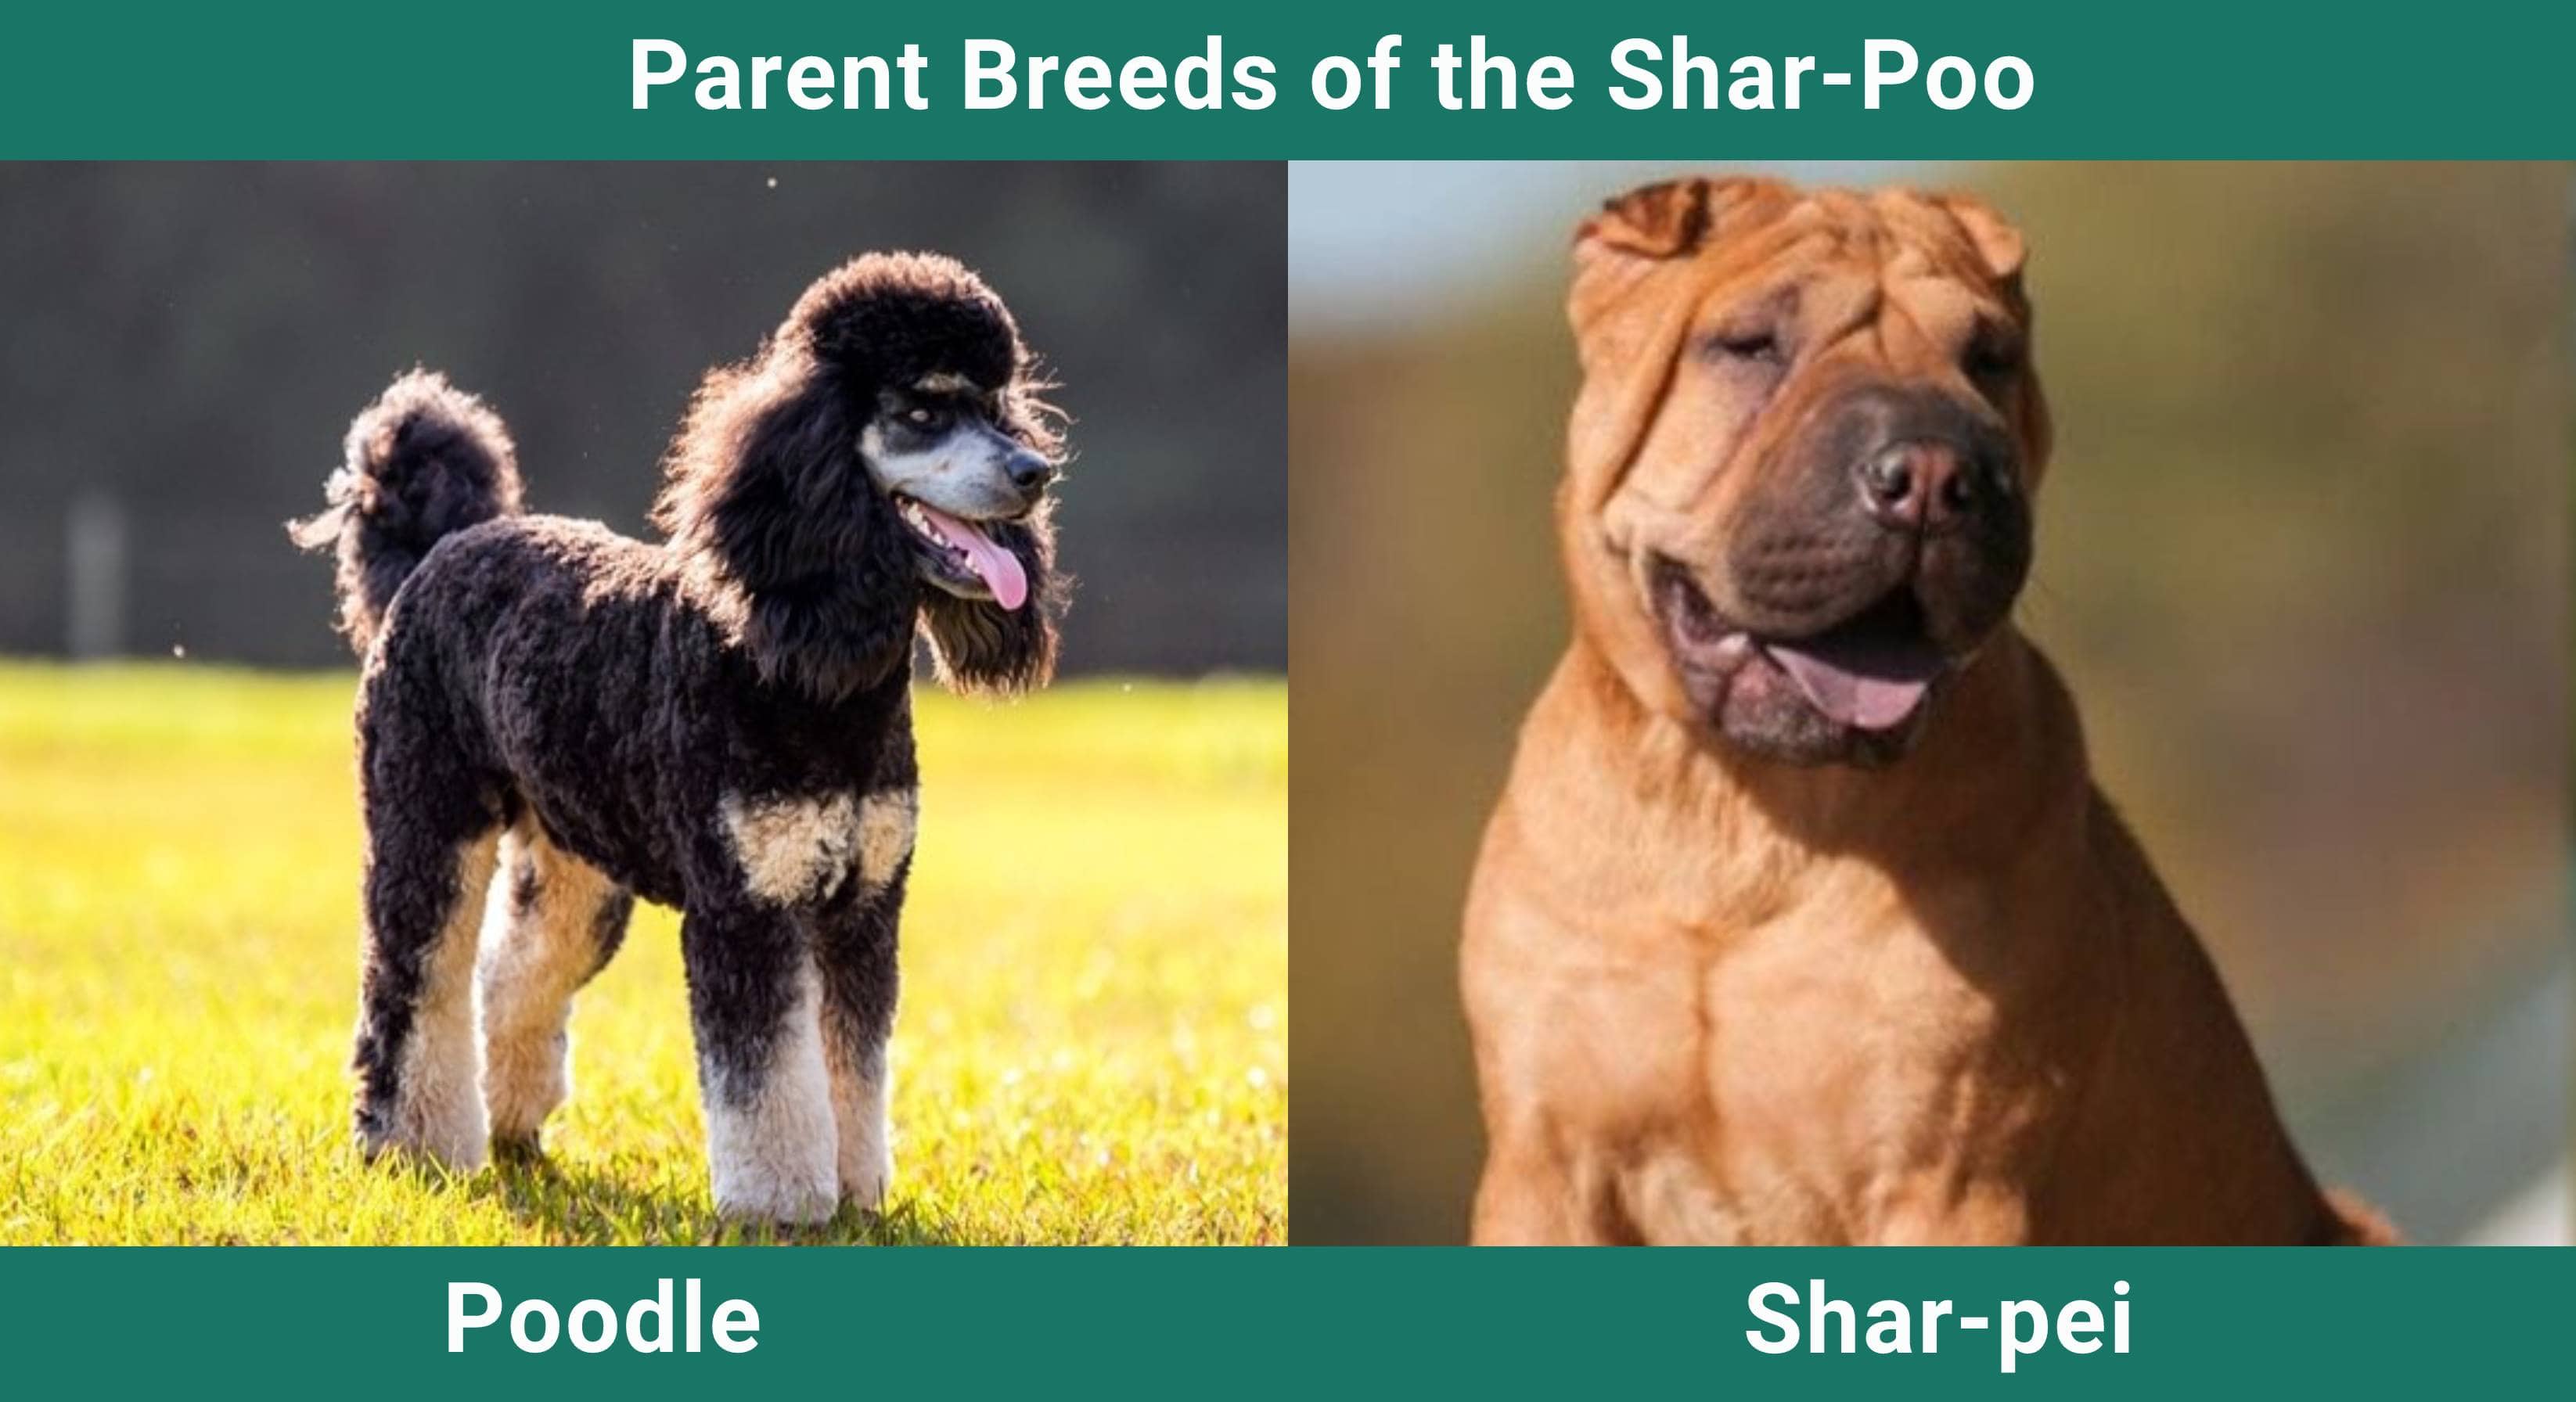 Parent_breeds_Shar-Poo